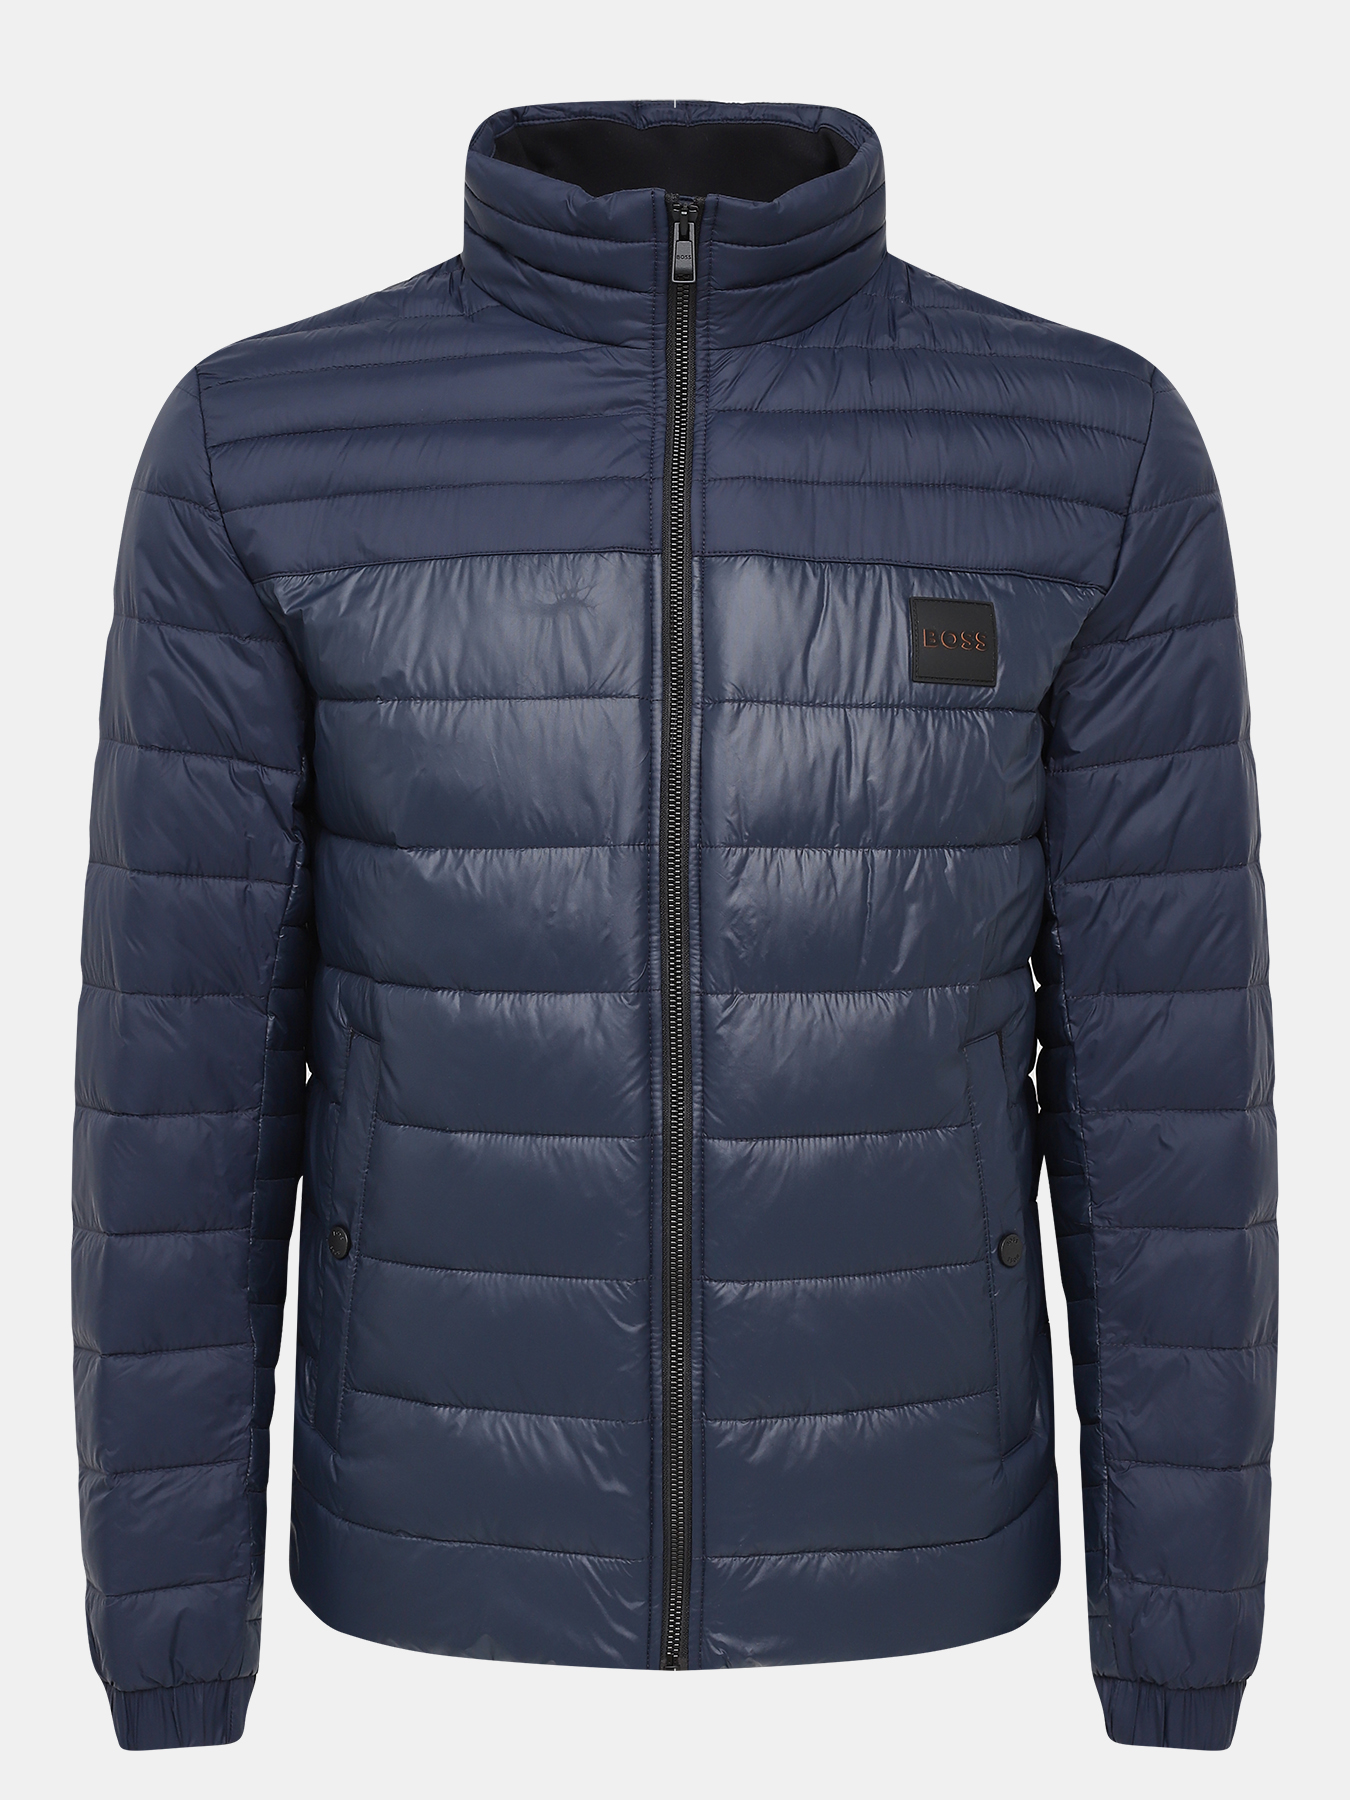 Куртка Oden big BOSS 434135-029, цвет темно-синий, размер 56